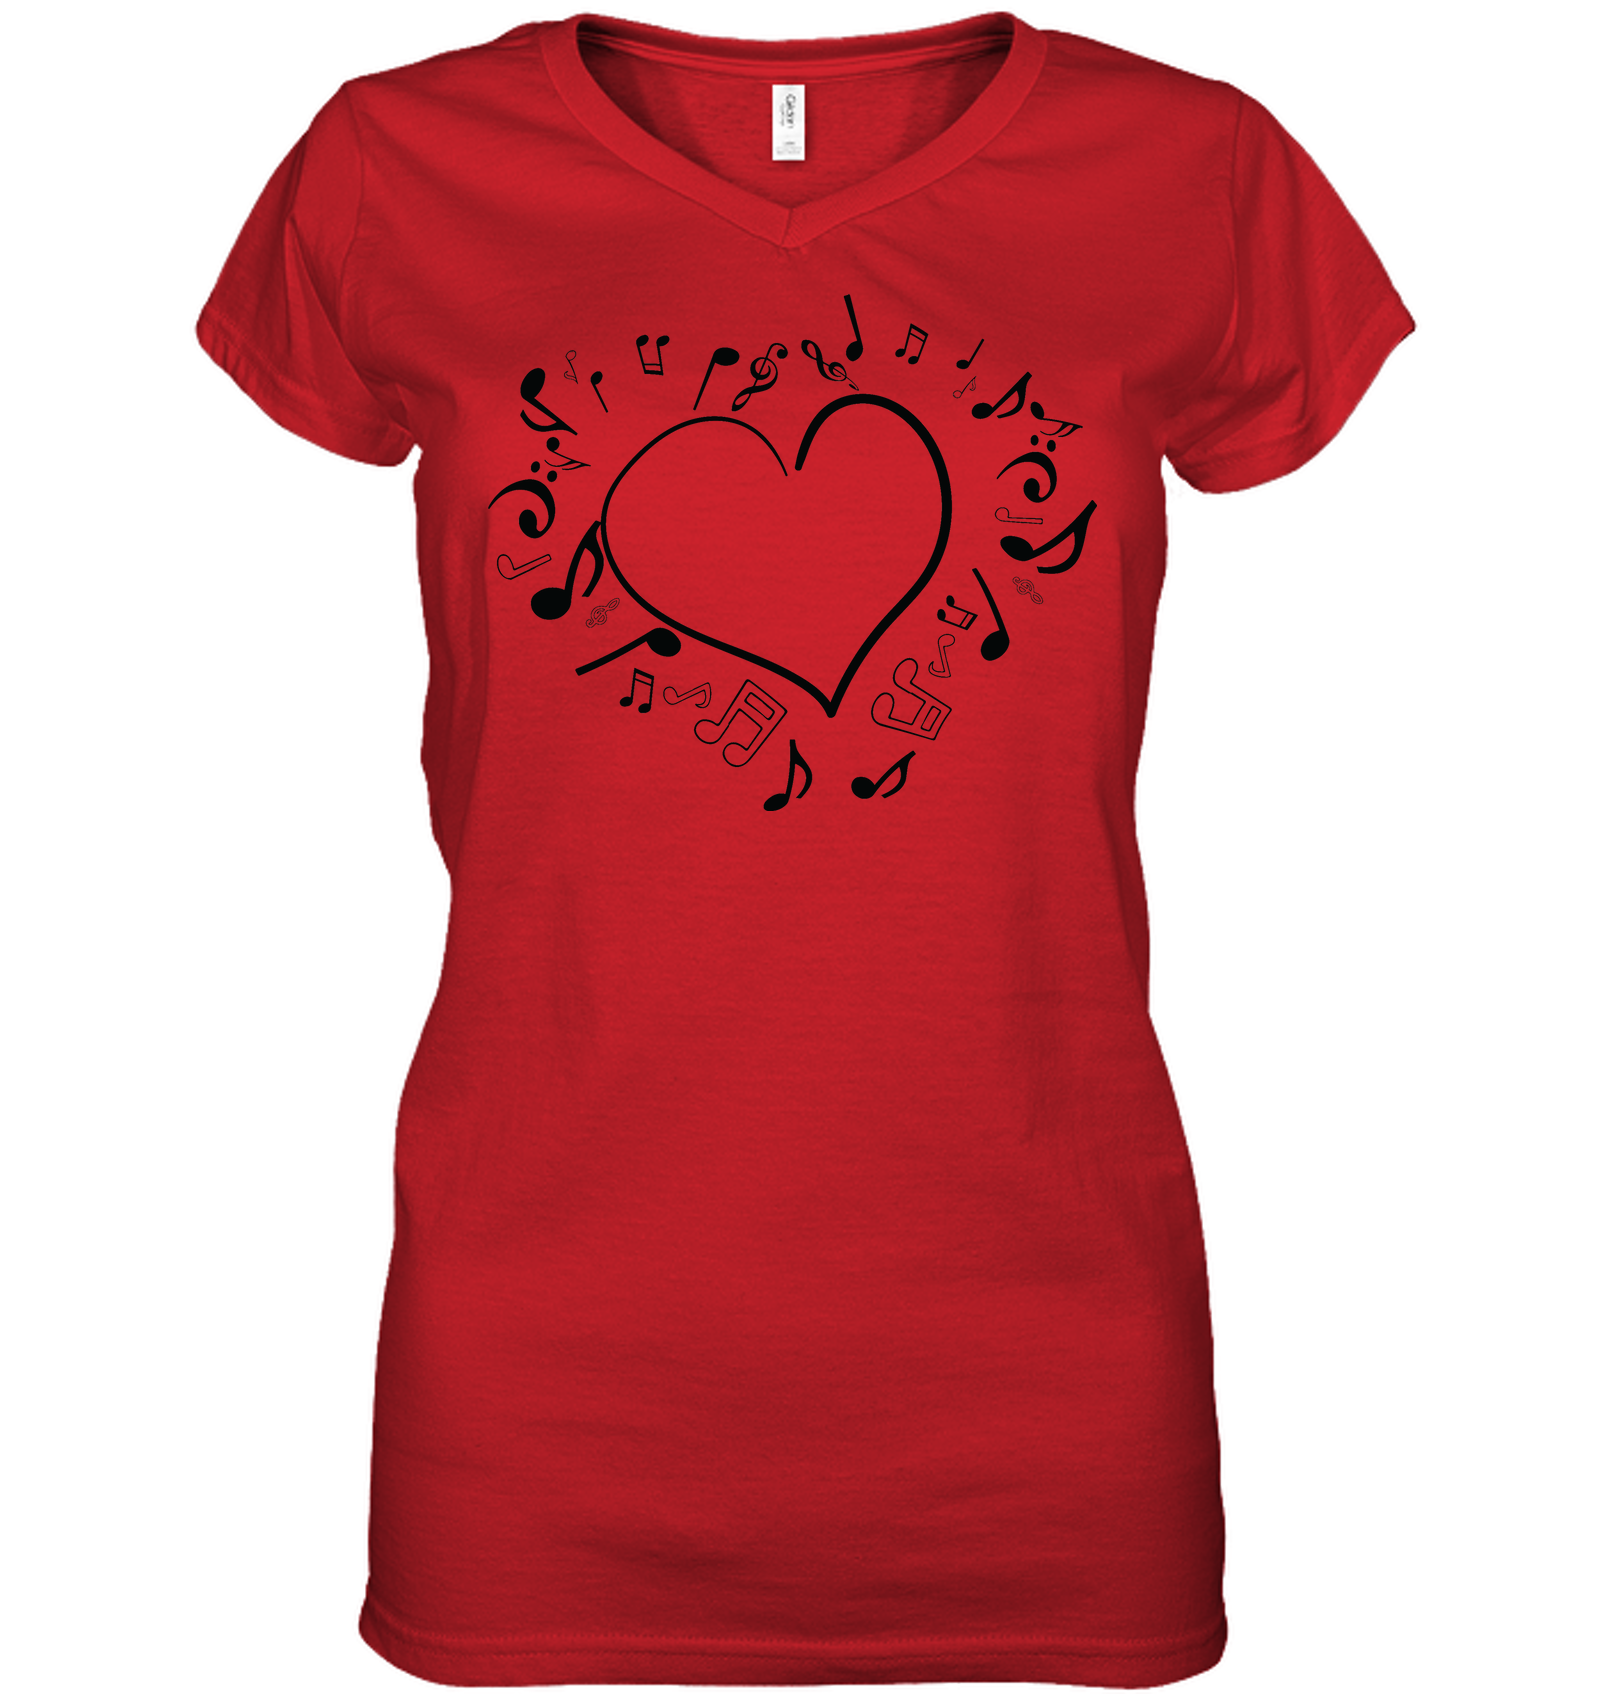 Floating Notes Heart Black - Hanes Women's Nano-T® V-Neck T-Shirt